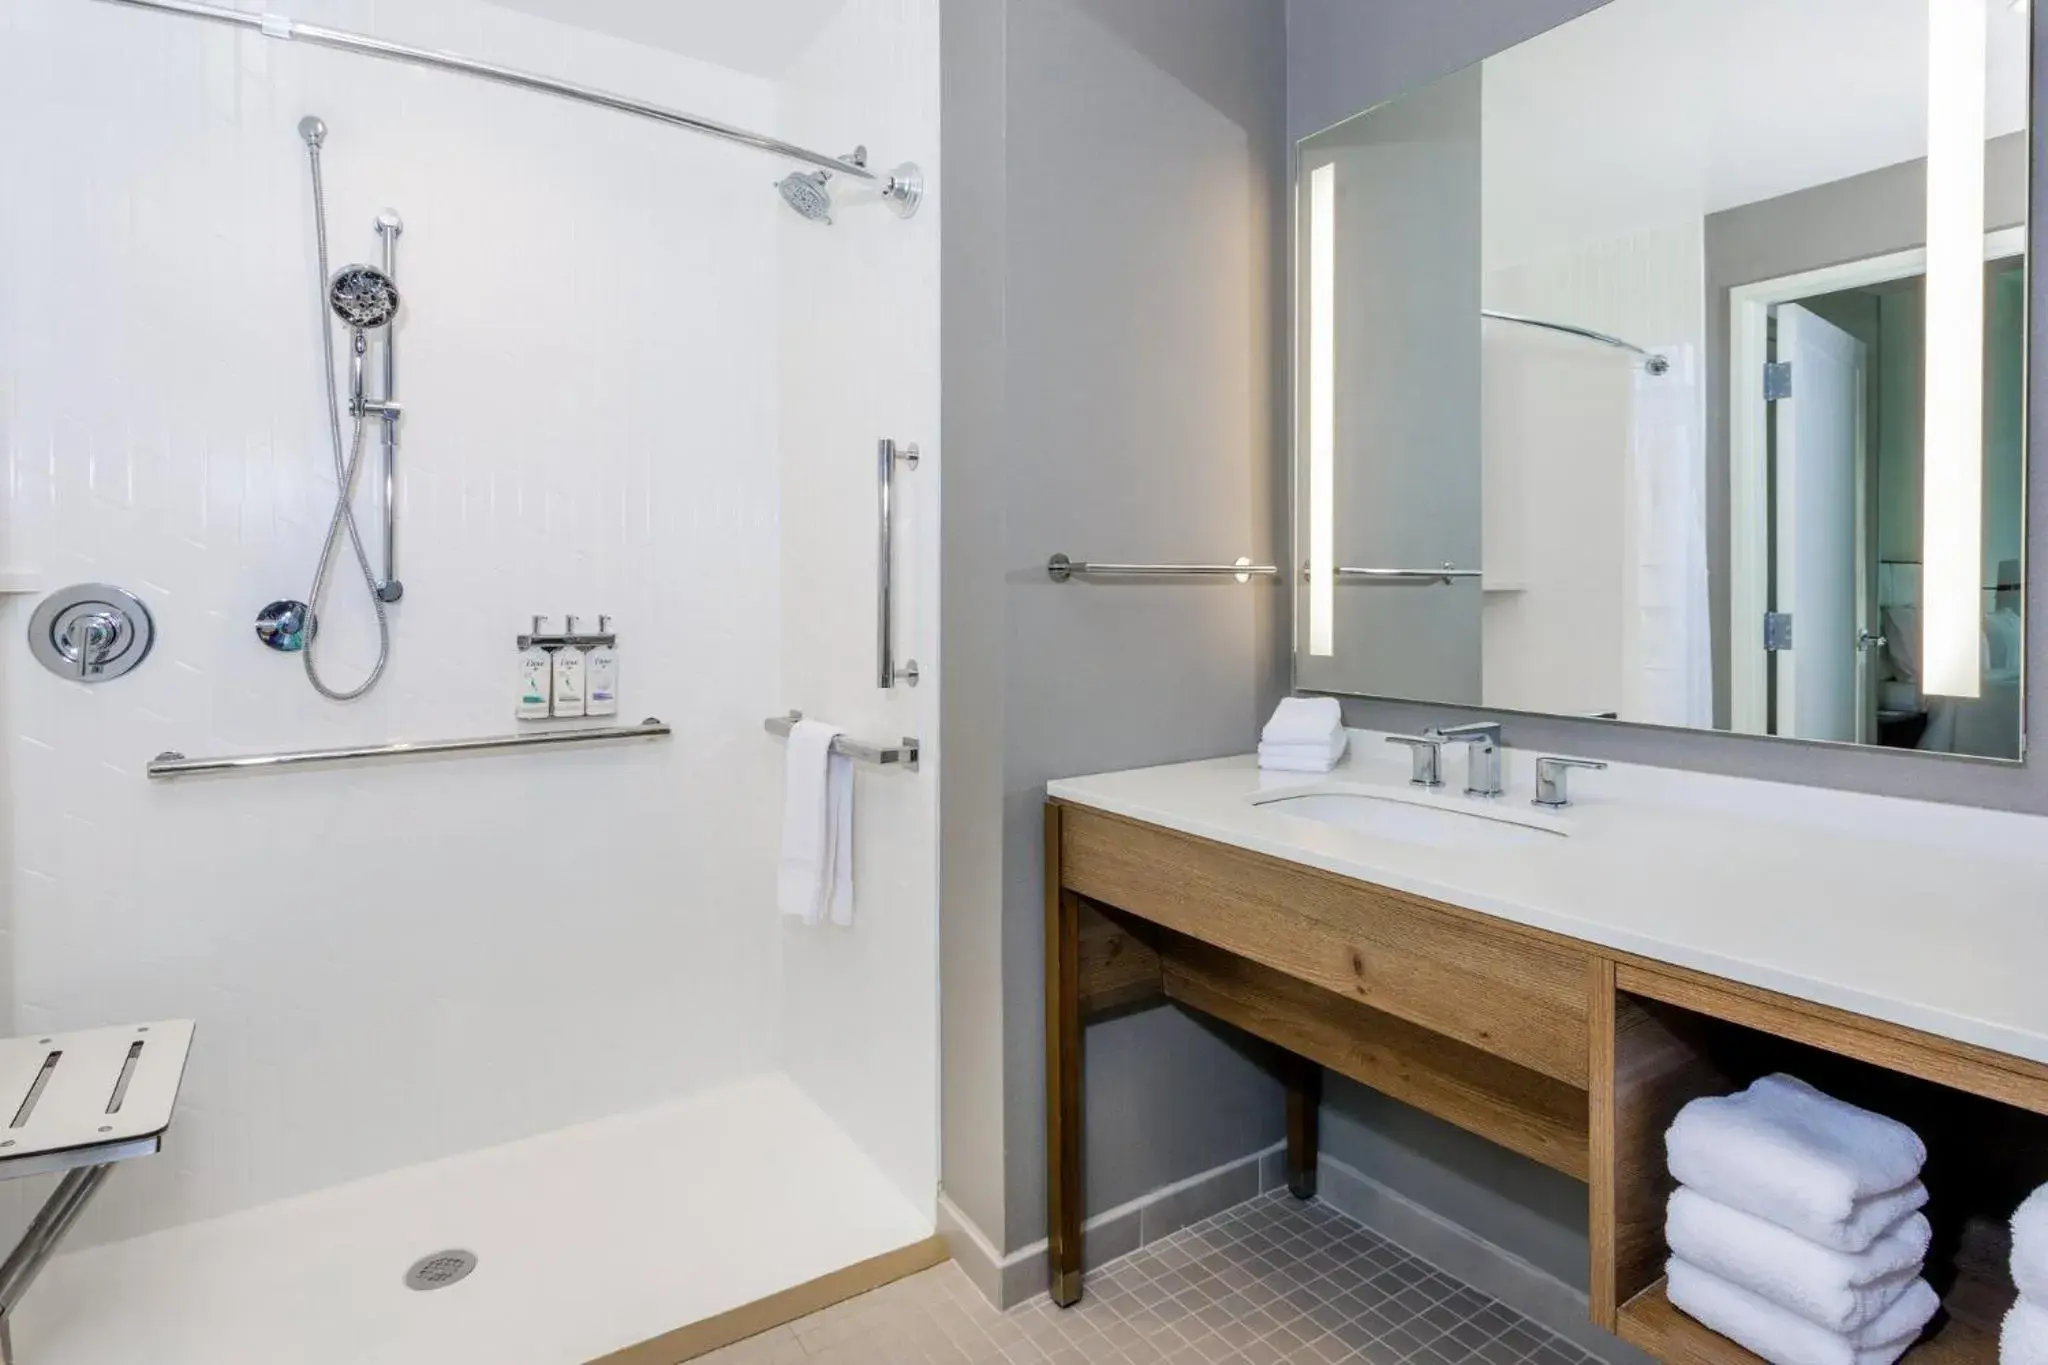 Photo of the whole room, Bathroom in Staybridge Suites Winter Haven - Auburndale